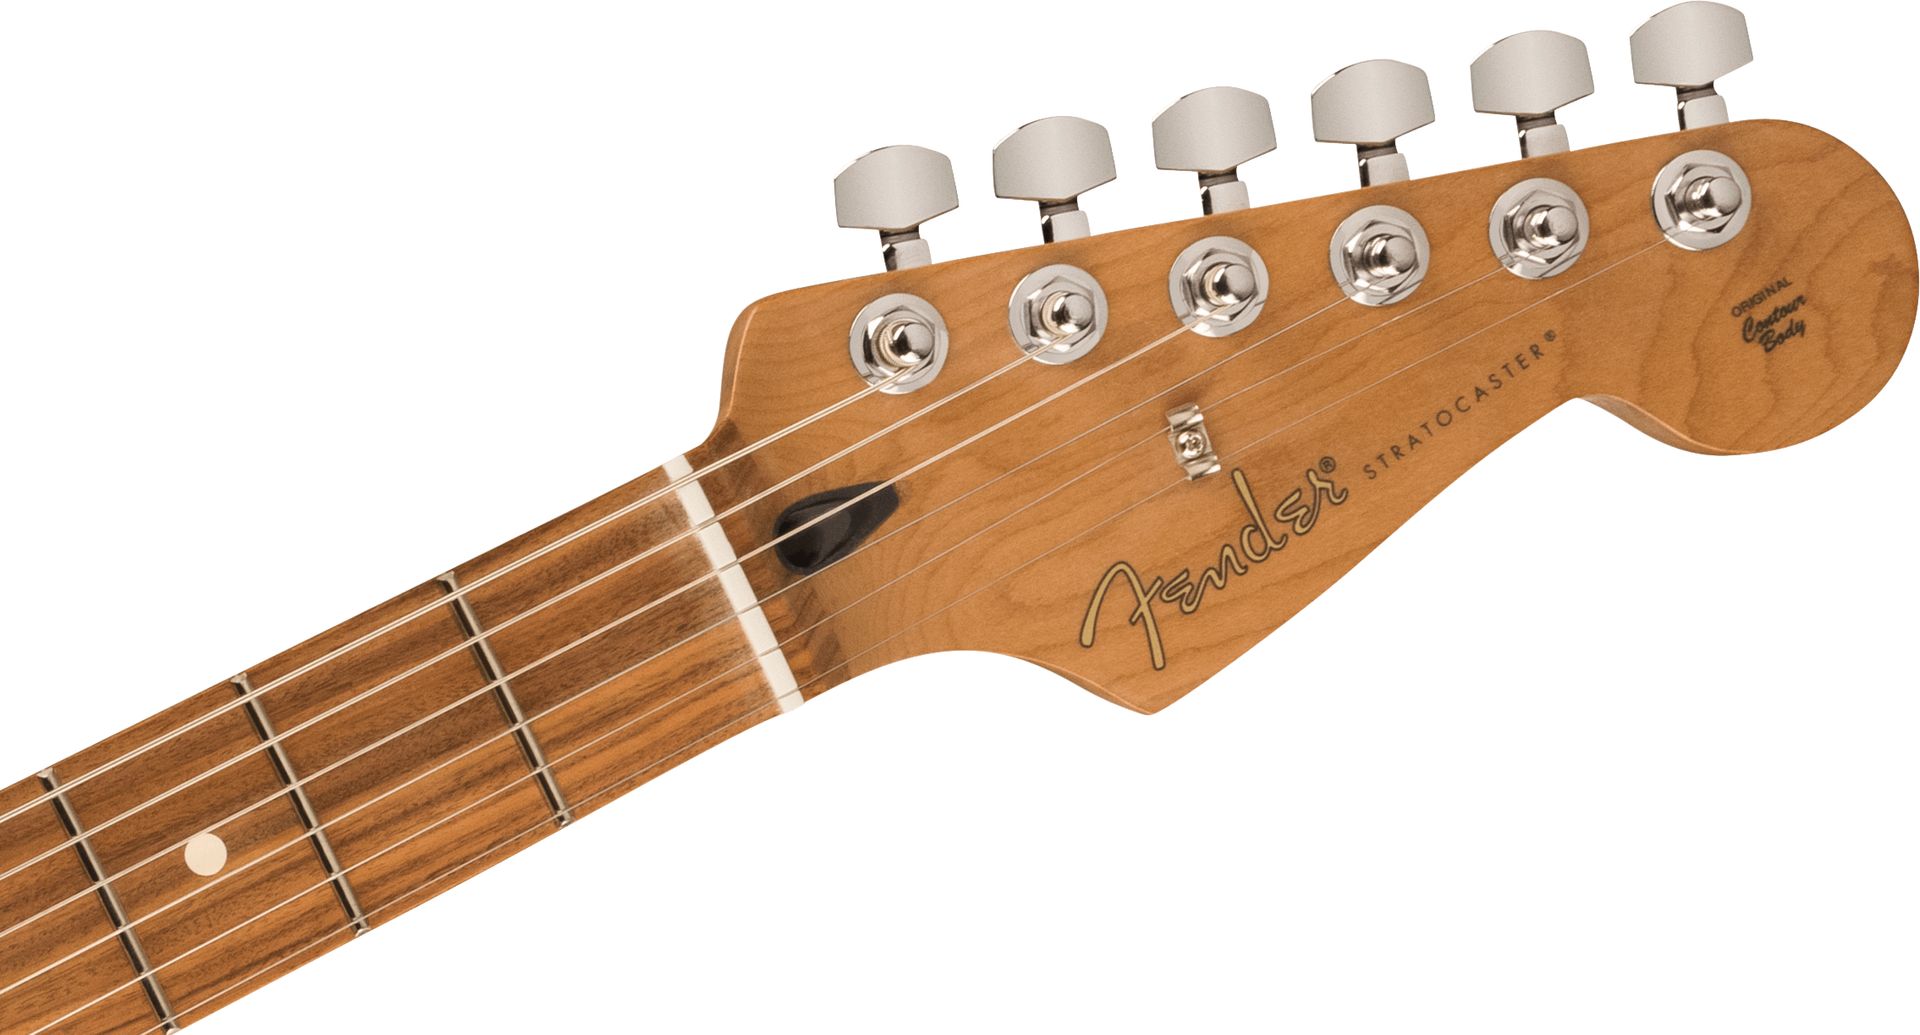 Fender Player Strat Limited Edition BLK